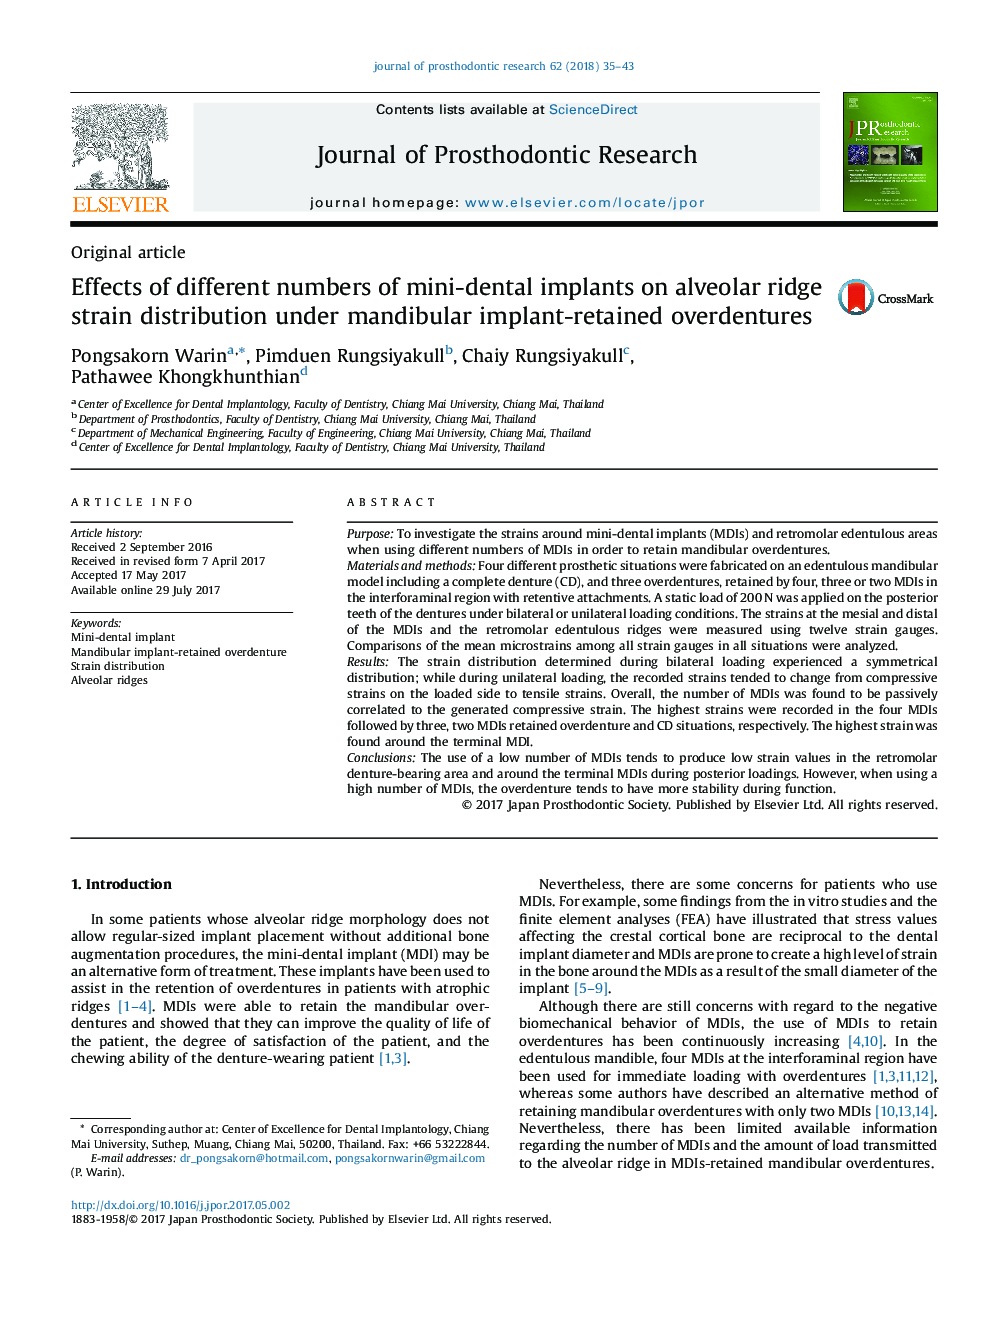 Effects of different numbers of mini-dental implants on alveolar ridge strain distribution under mandibular implant-retained overdentures